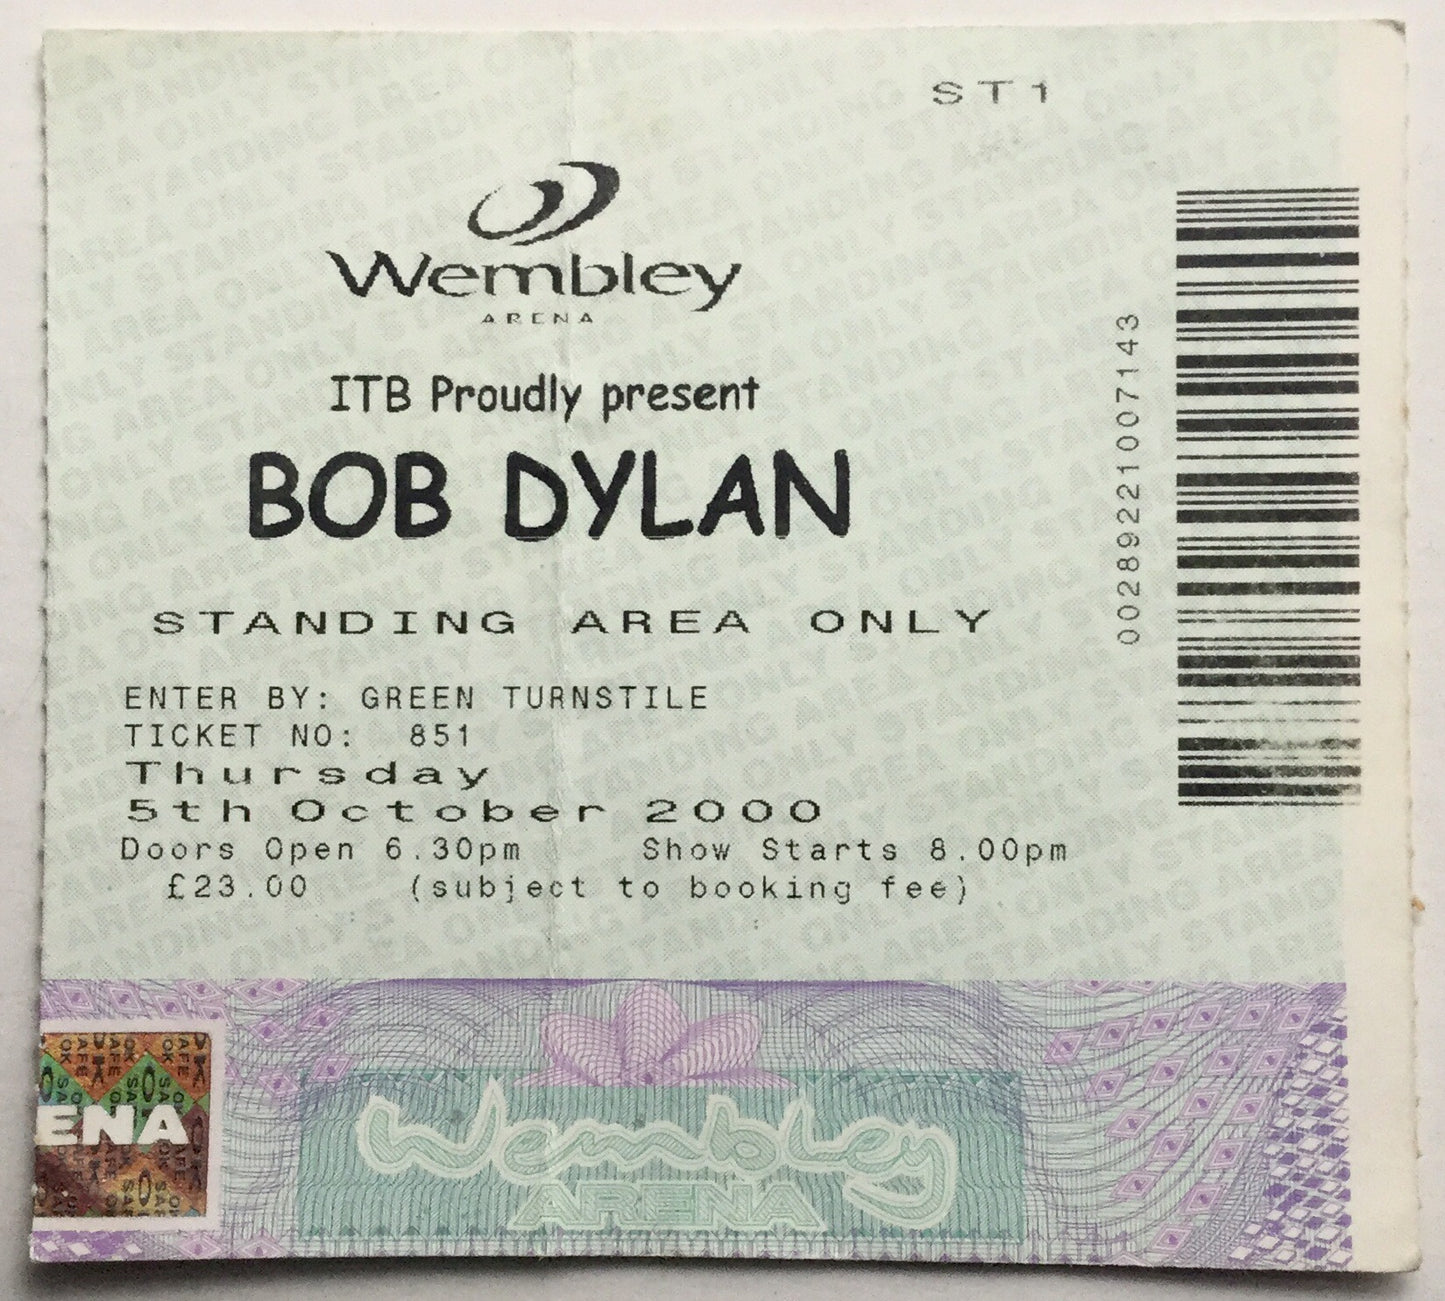 Bob Dylan Original Used Concert Ticket Wembley Arena London 5th Oct 2000